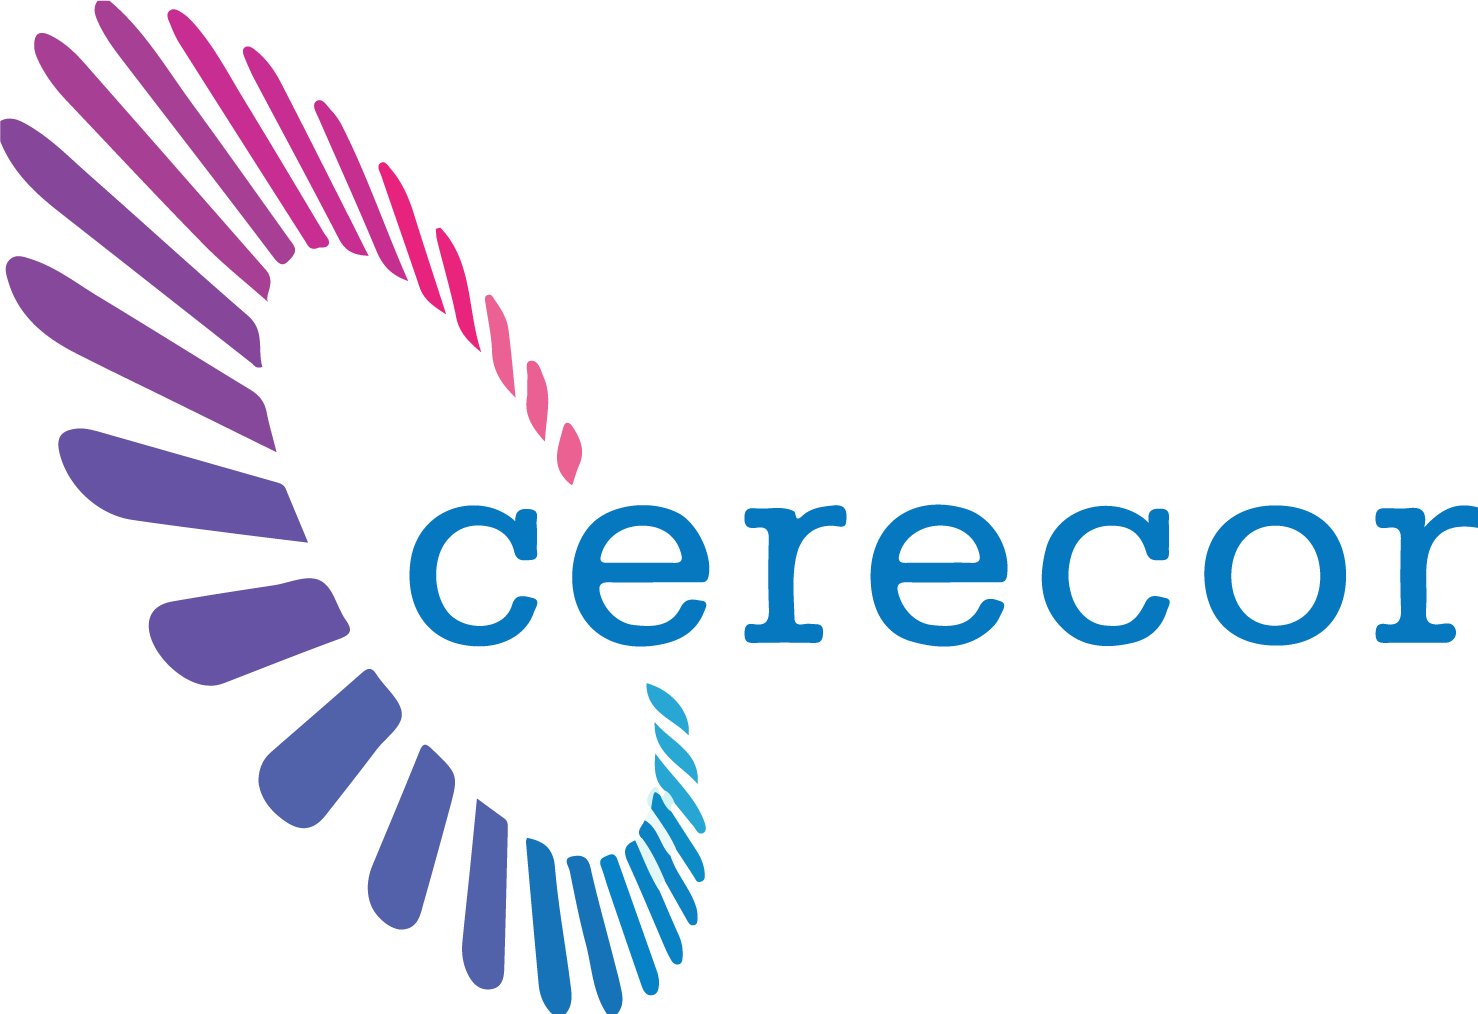 Cerecor logo large (transparent PNG)